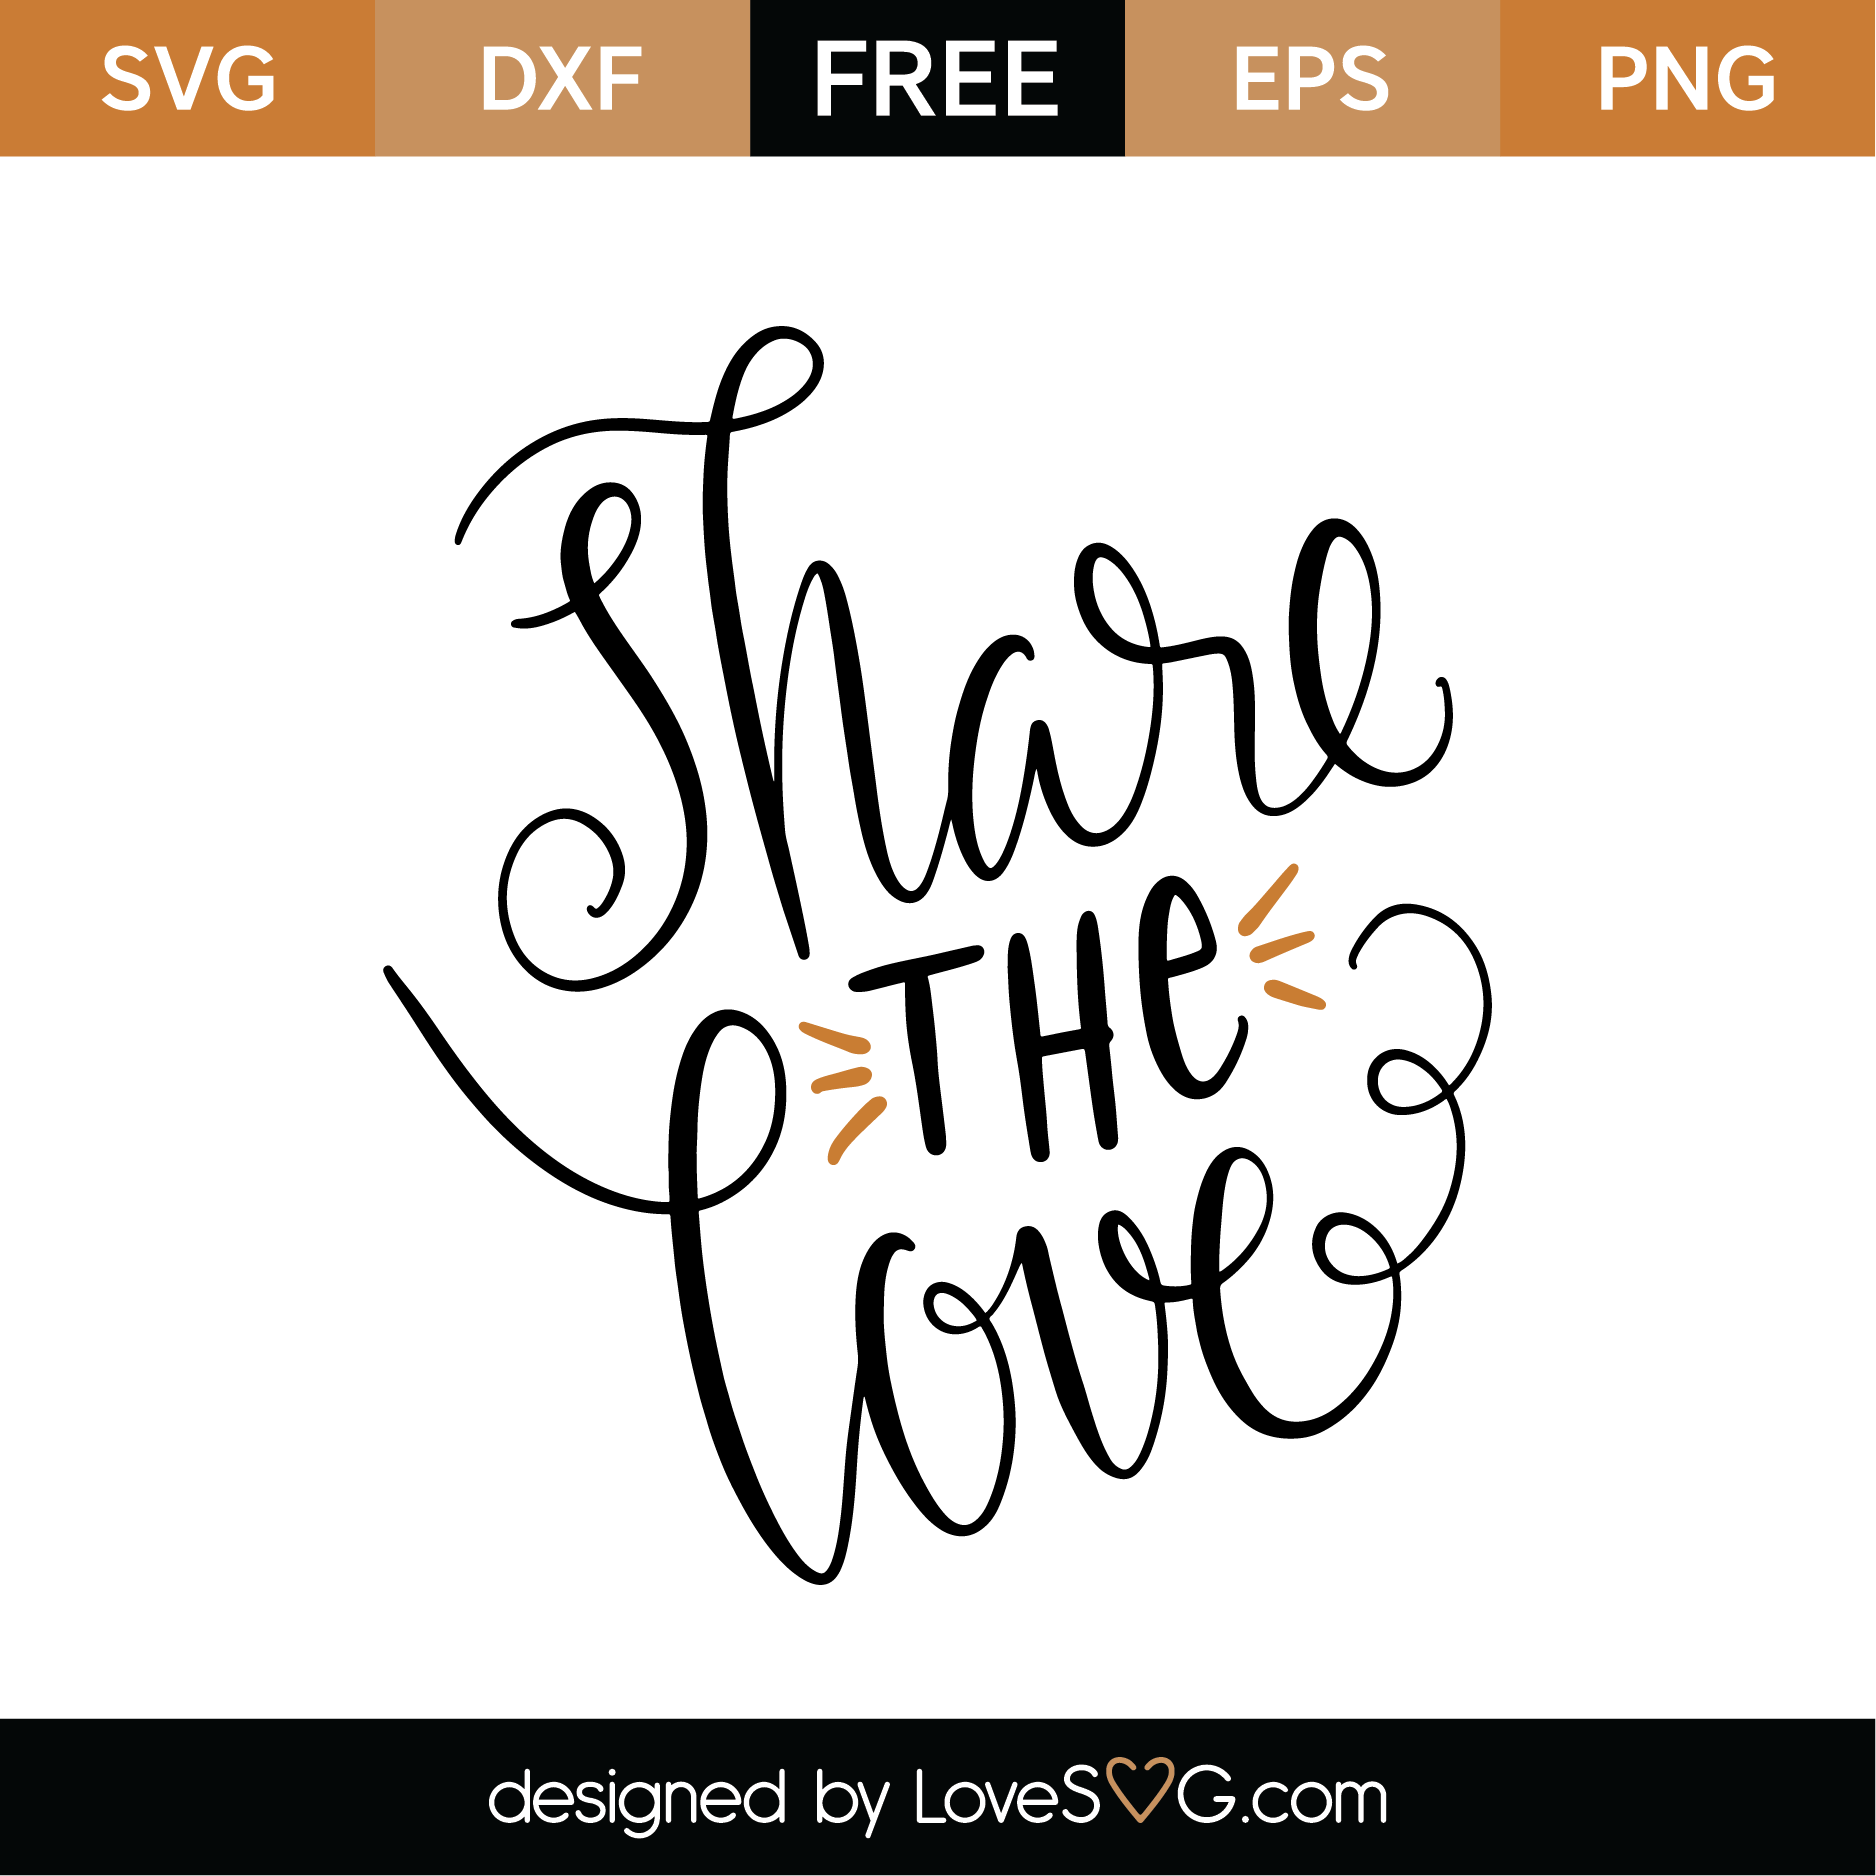 Download Free Share The Love SVG Cut File | Lovesvg.com